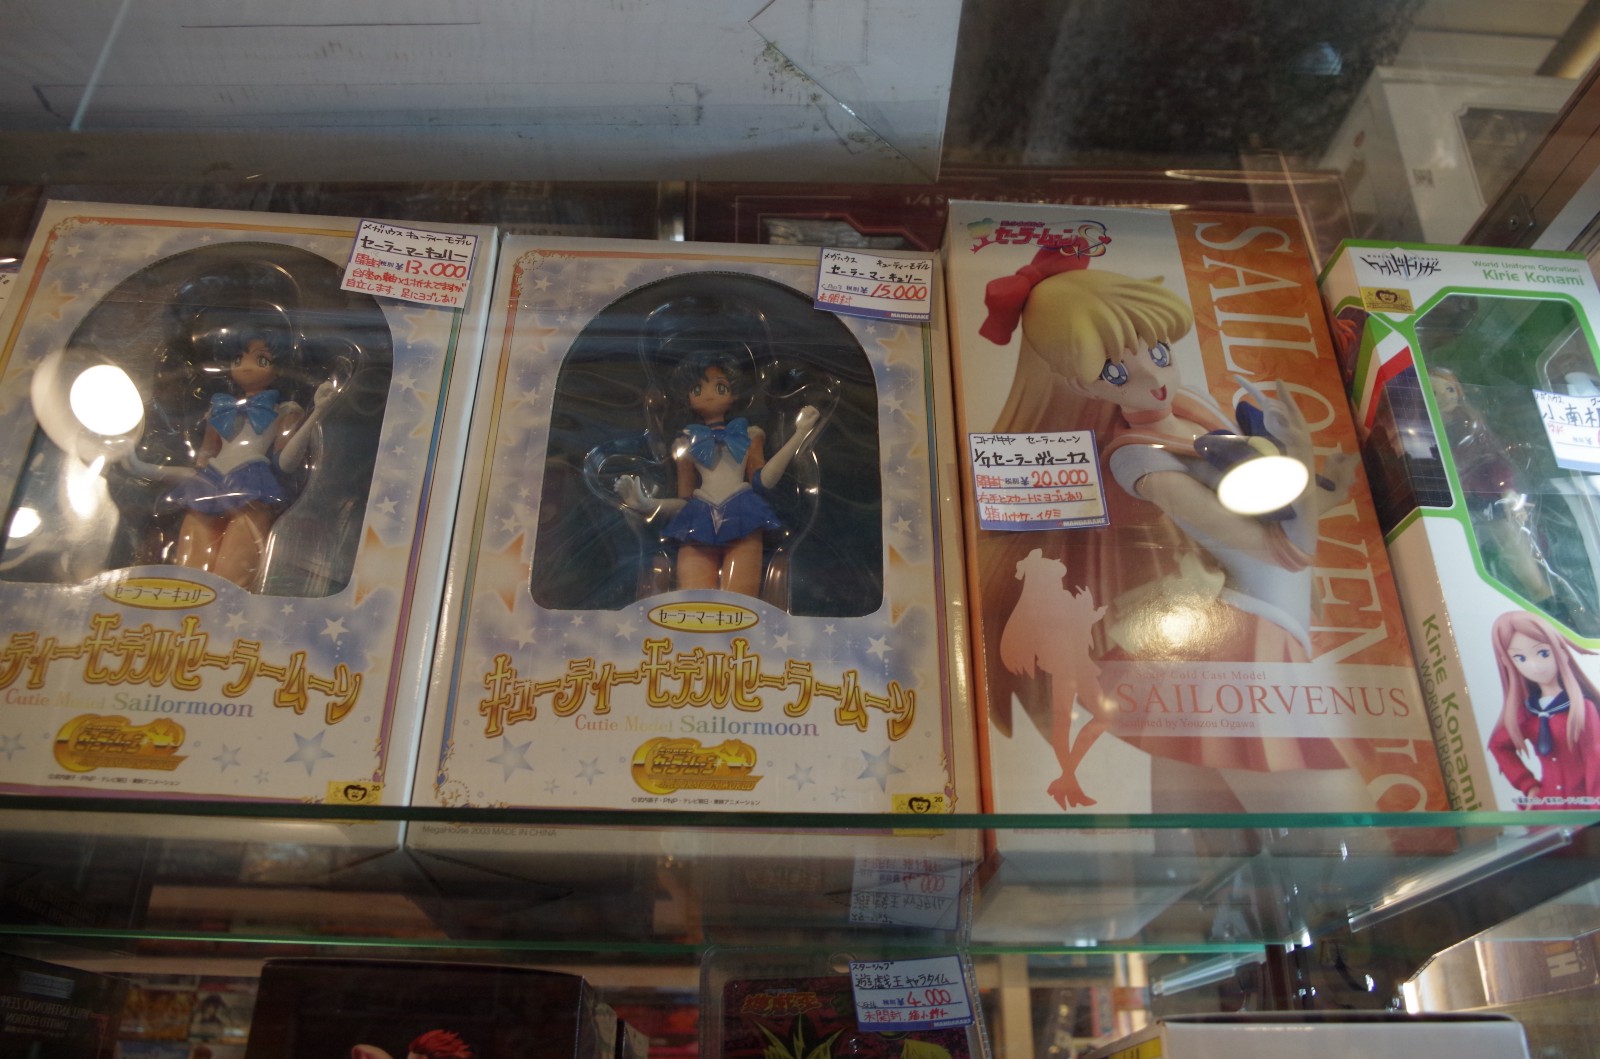 Anime figure dolls sold at Mandarake